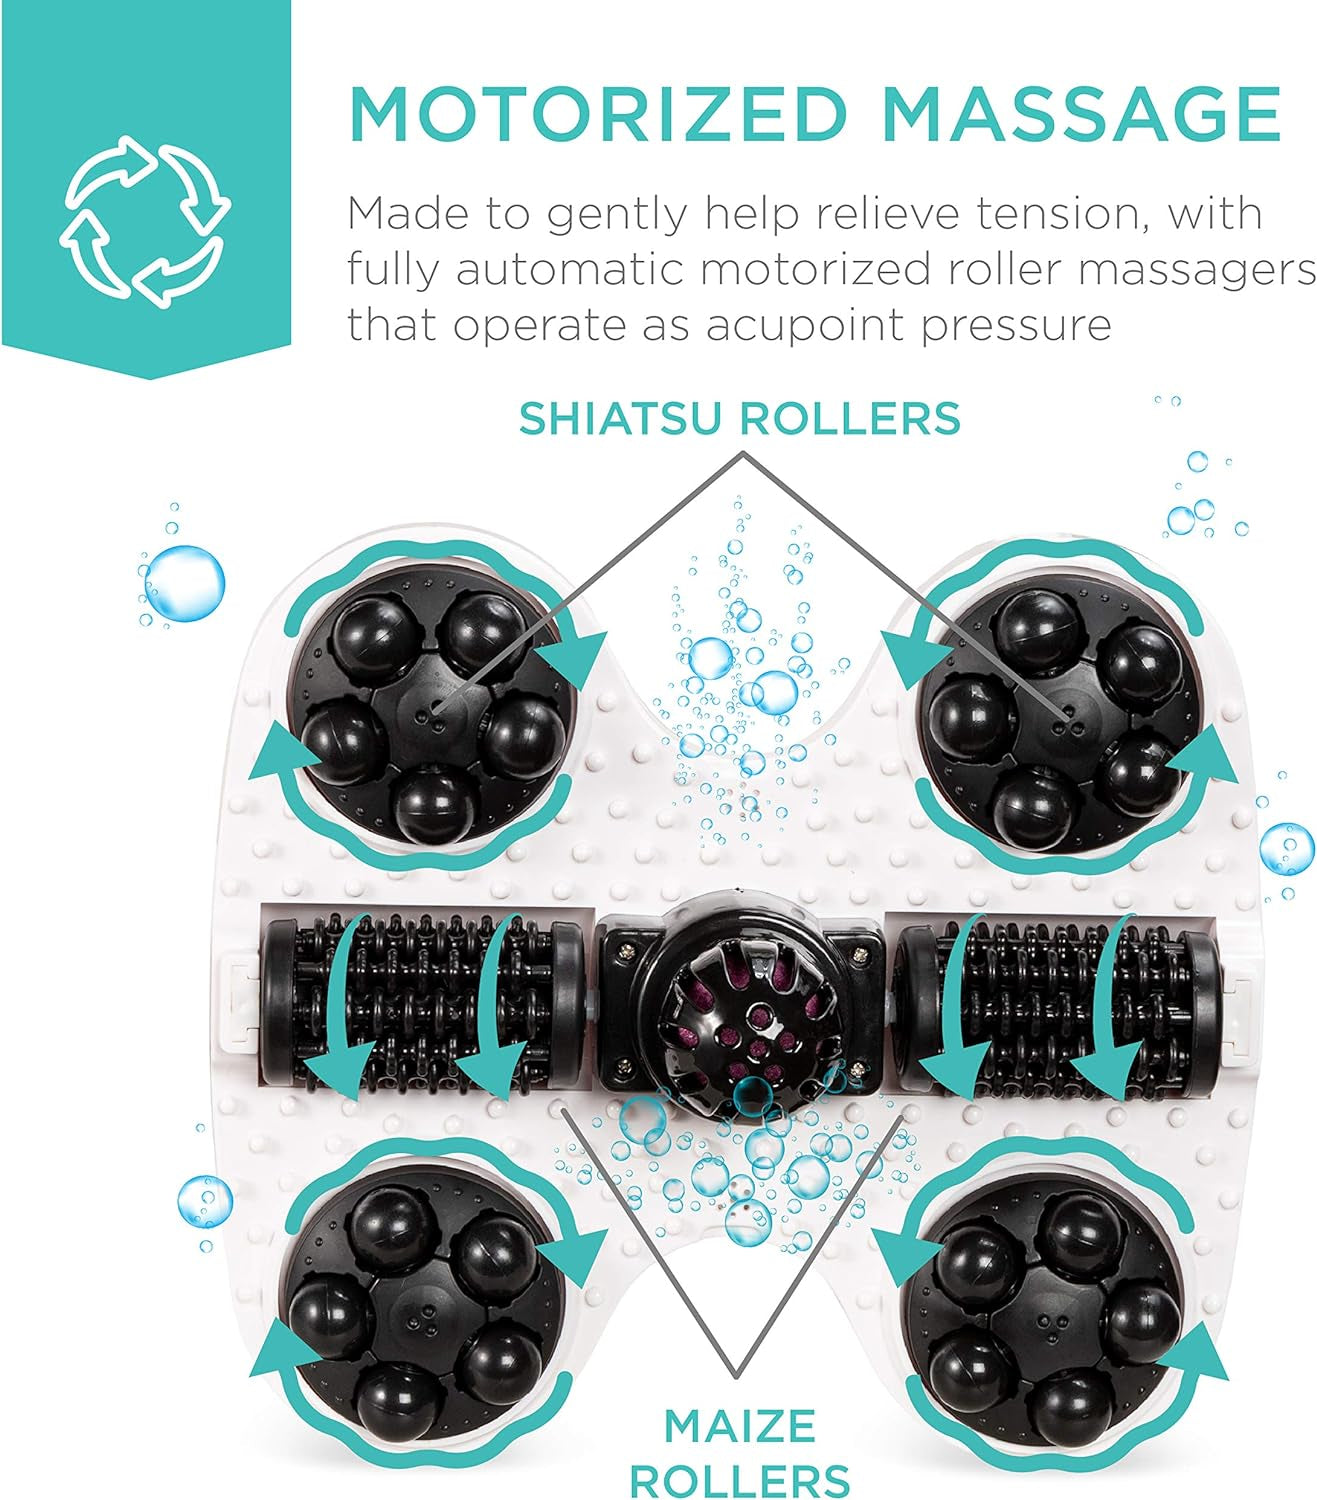 Motorized Foot Spa Bath Massager, Adjustable Waterfall Shower & Fast Heating, Automatic Shiatsu Pedicure Massage, Pumice Stone, Rollers to Relieve Feet Muscle Pain - Black